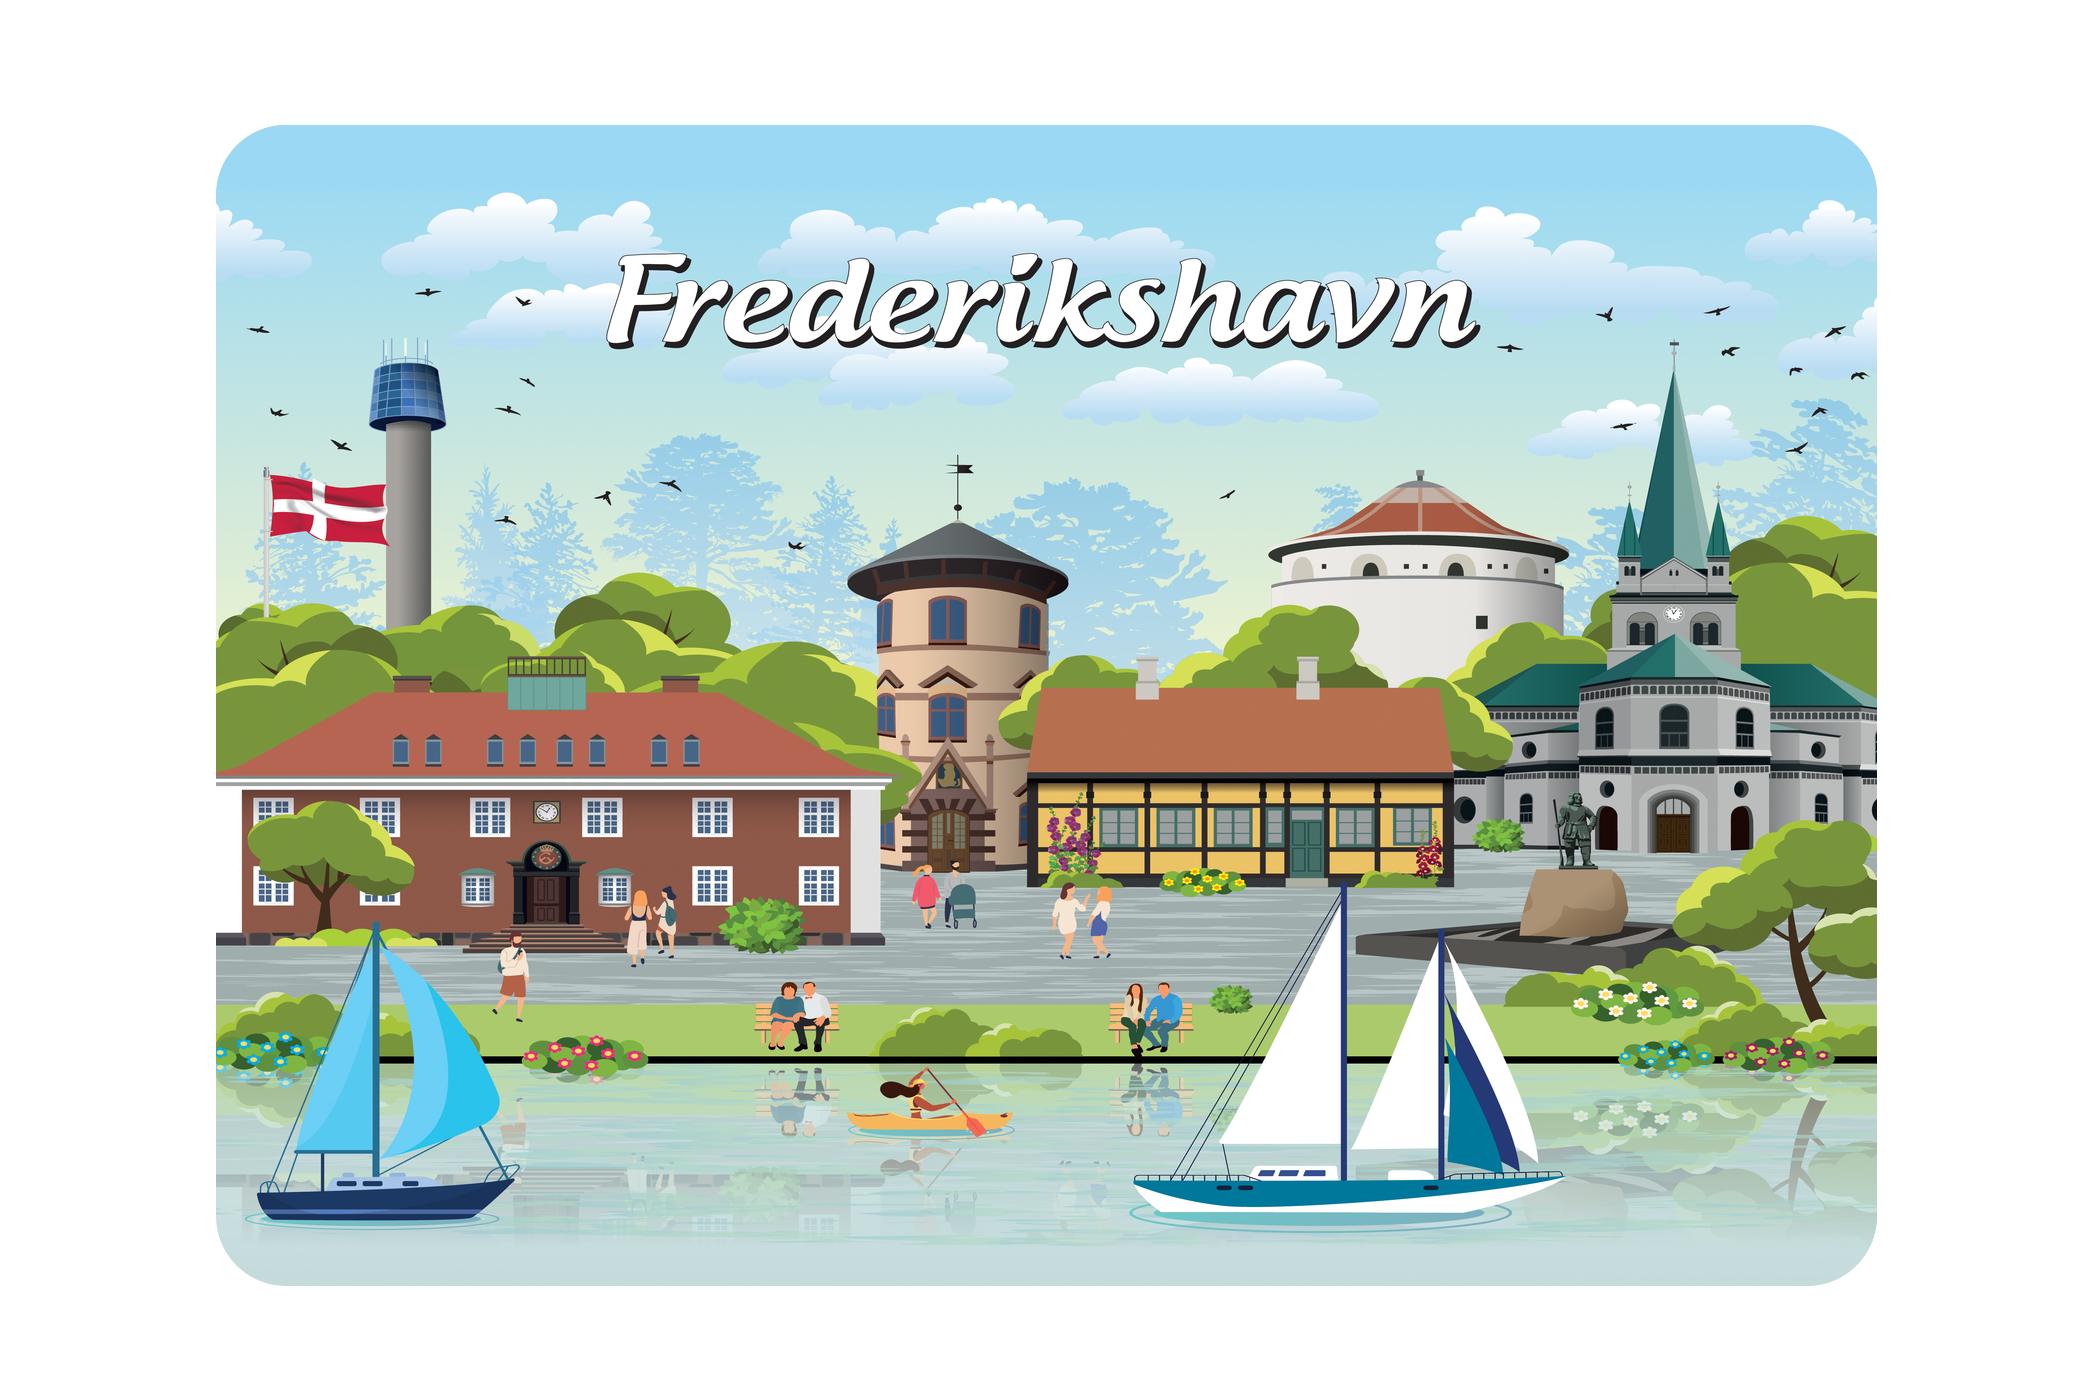 Frederikshavn - Bykoncept